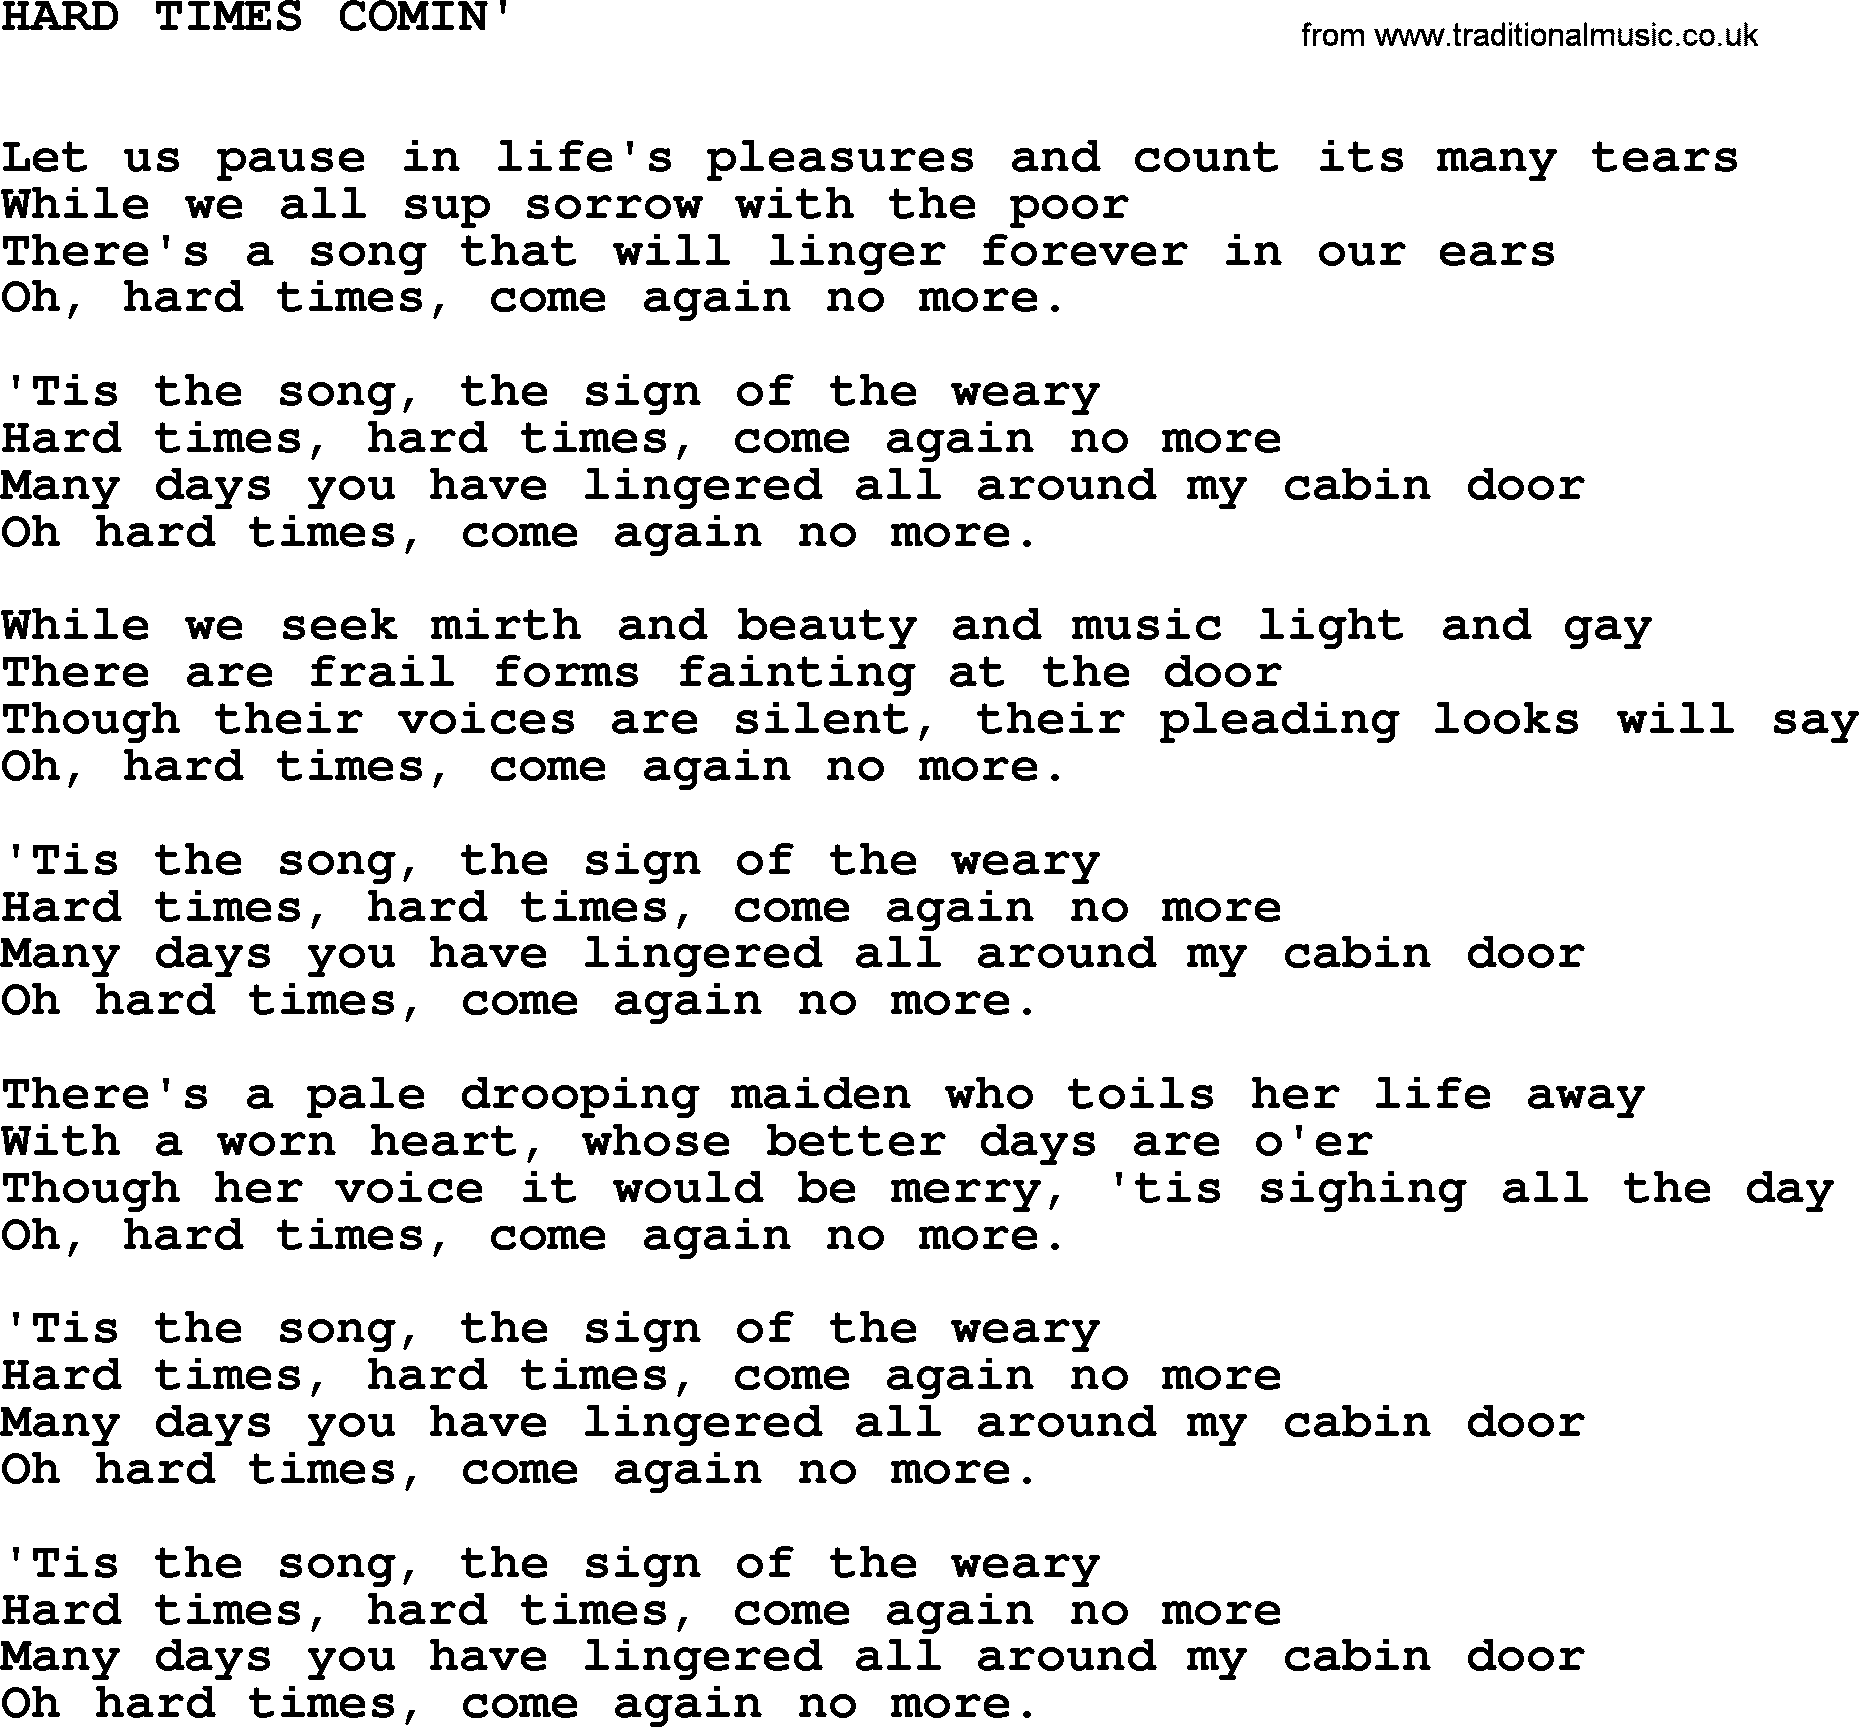 Johnny Cash song Hard Times Comin'.txt lyrics